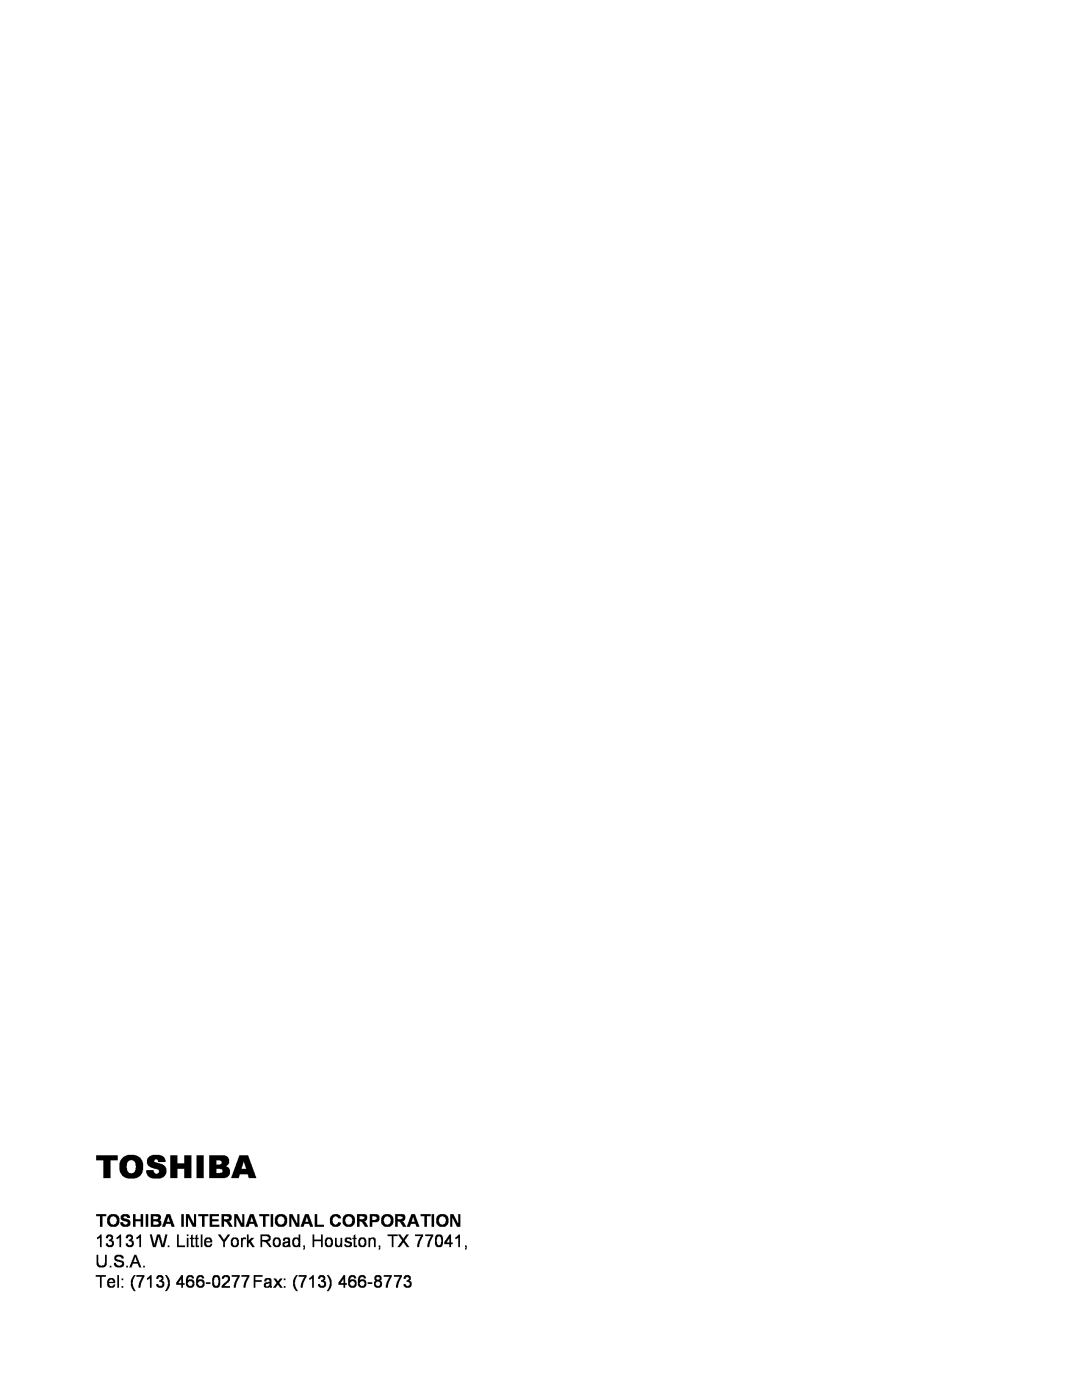 Toshiba HV6AS instruction manual Toshiba International Corporation 